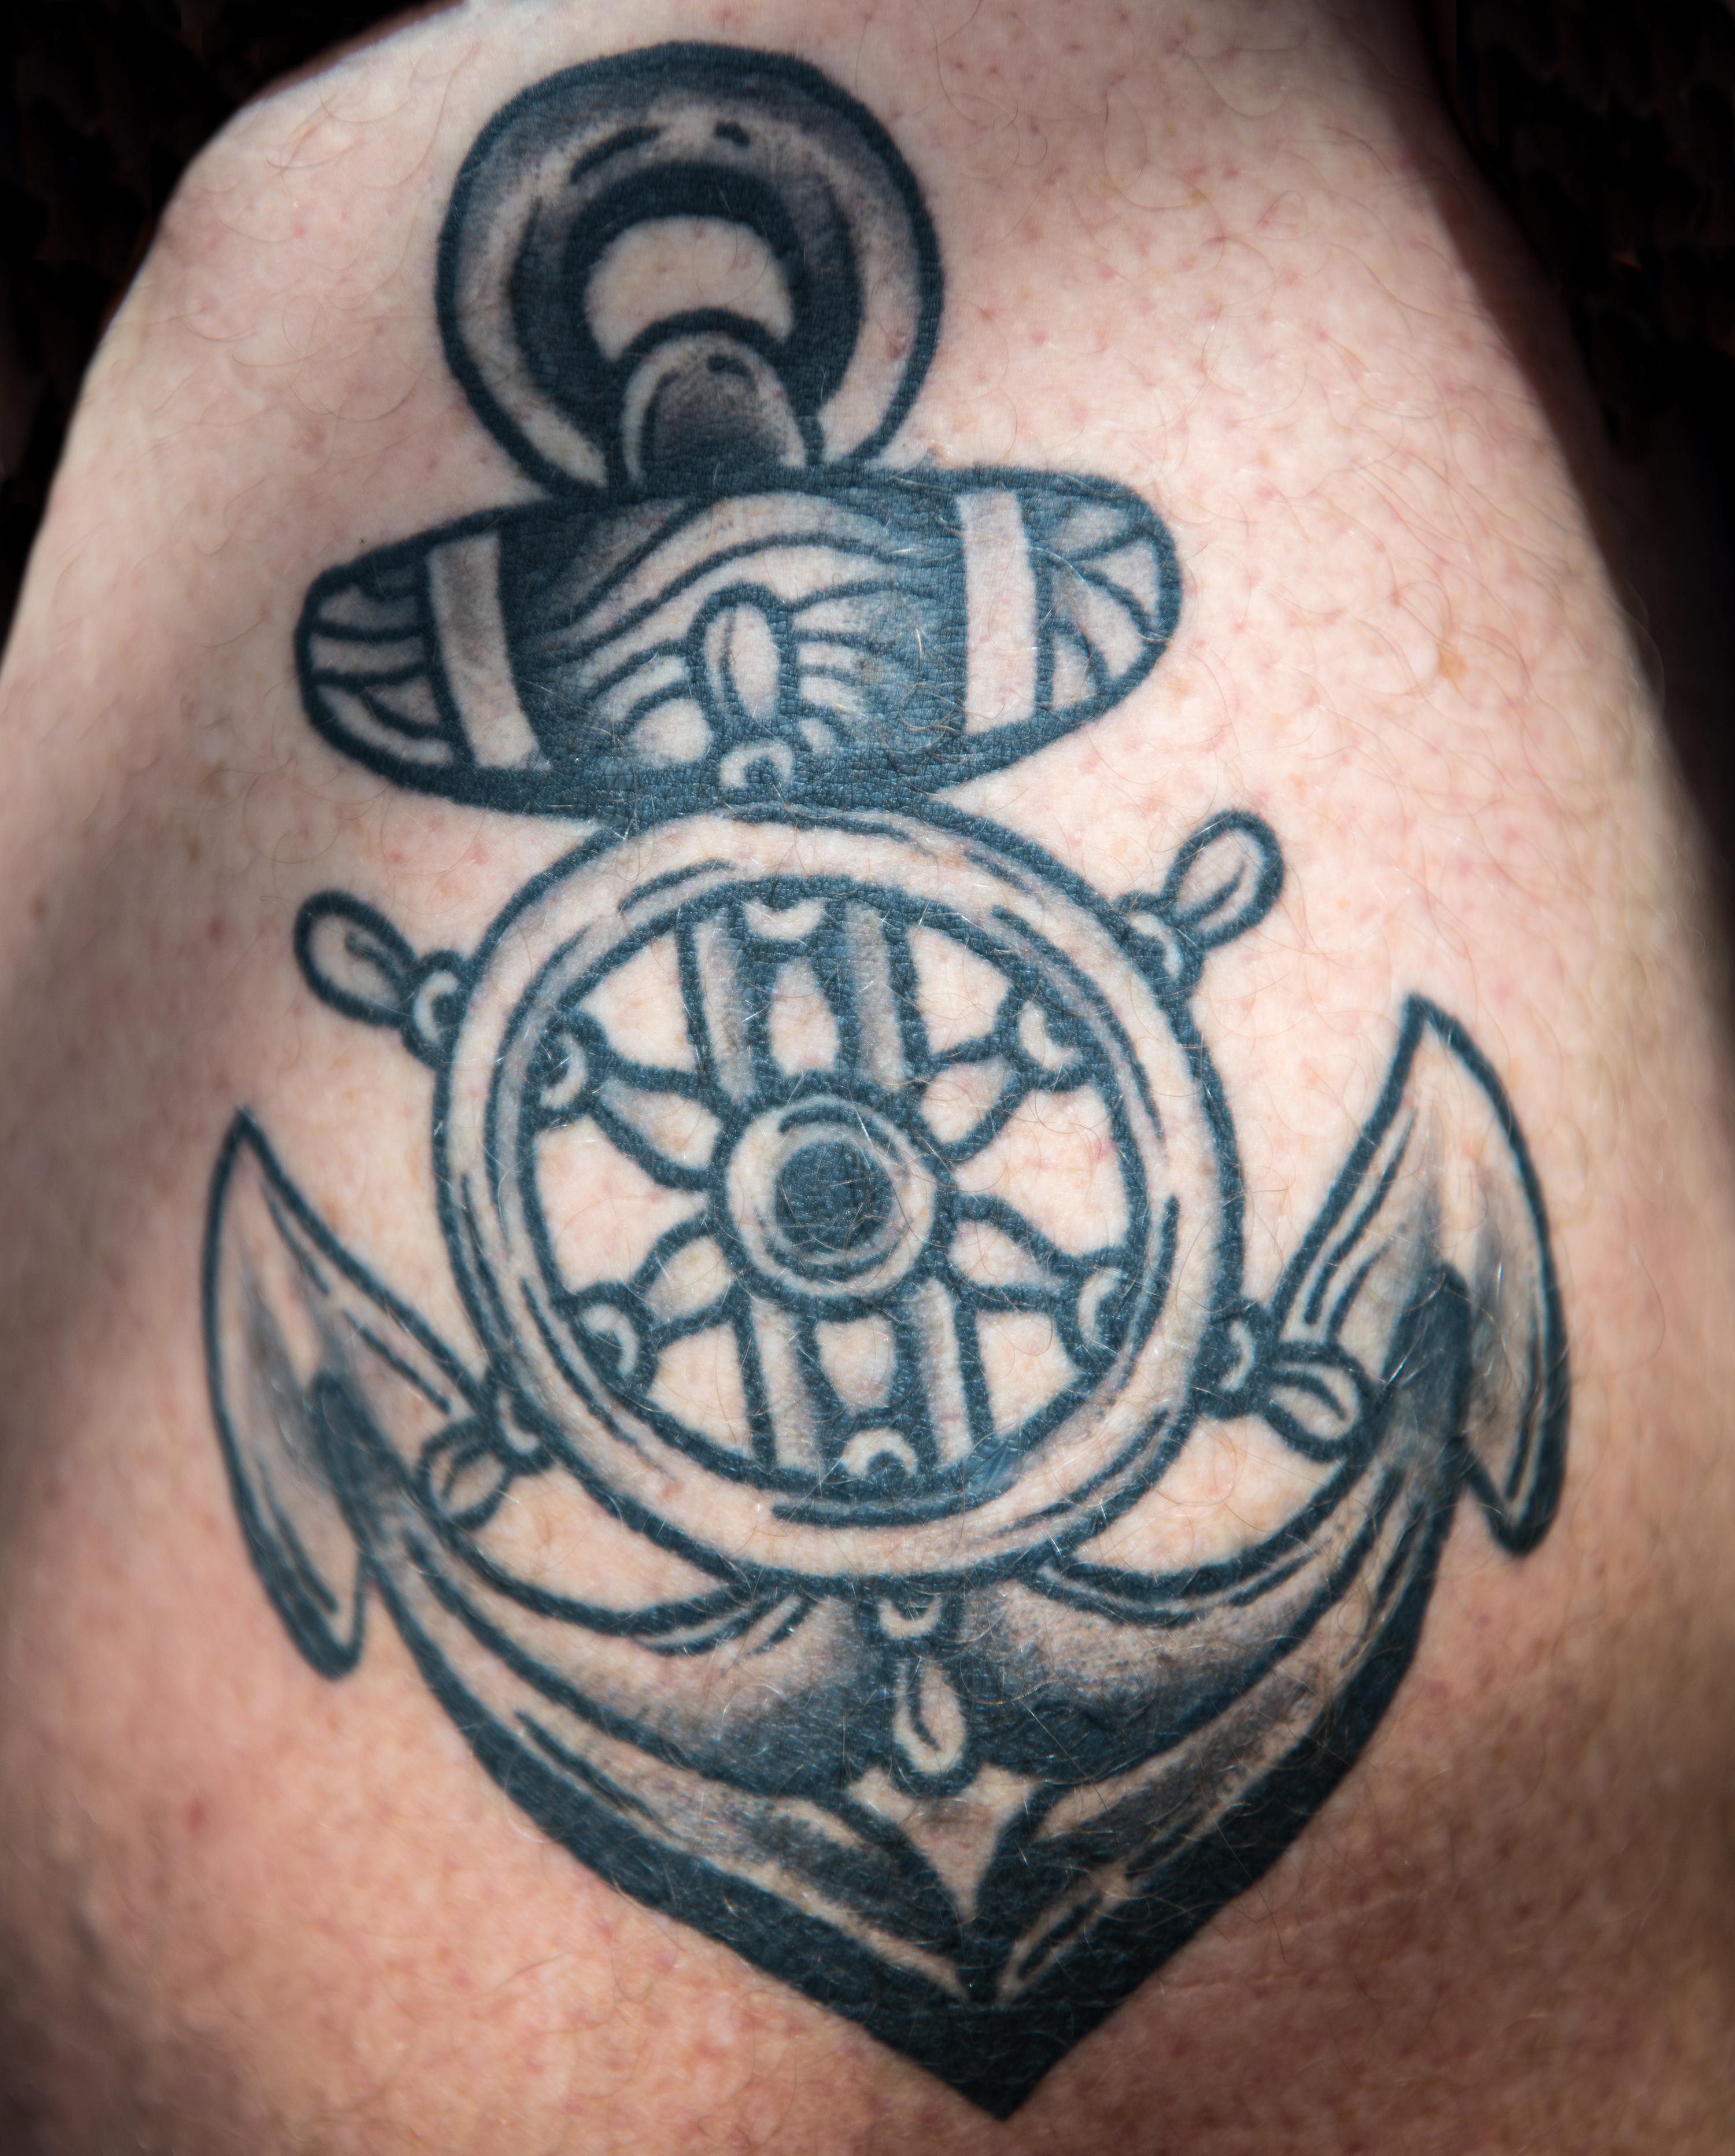 Ship wheel tattoo on the inner forearm. | Ship wheel tattoo, Wheel tattoo,  Ship tattoo